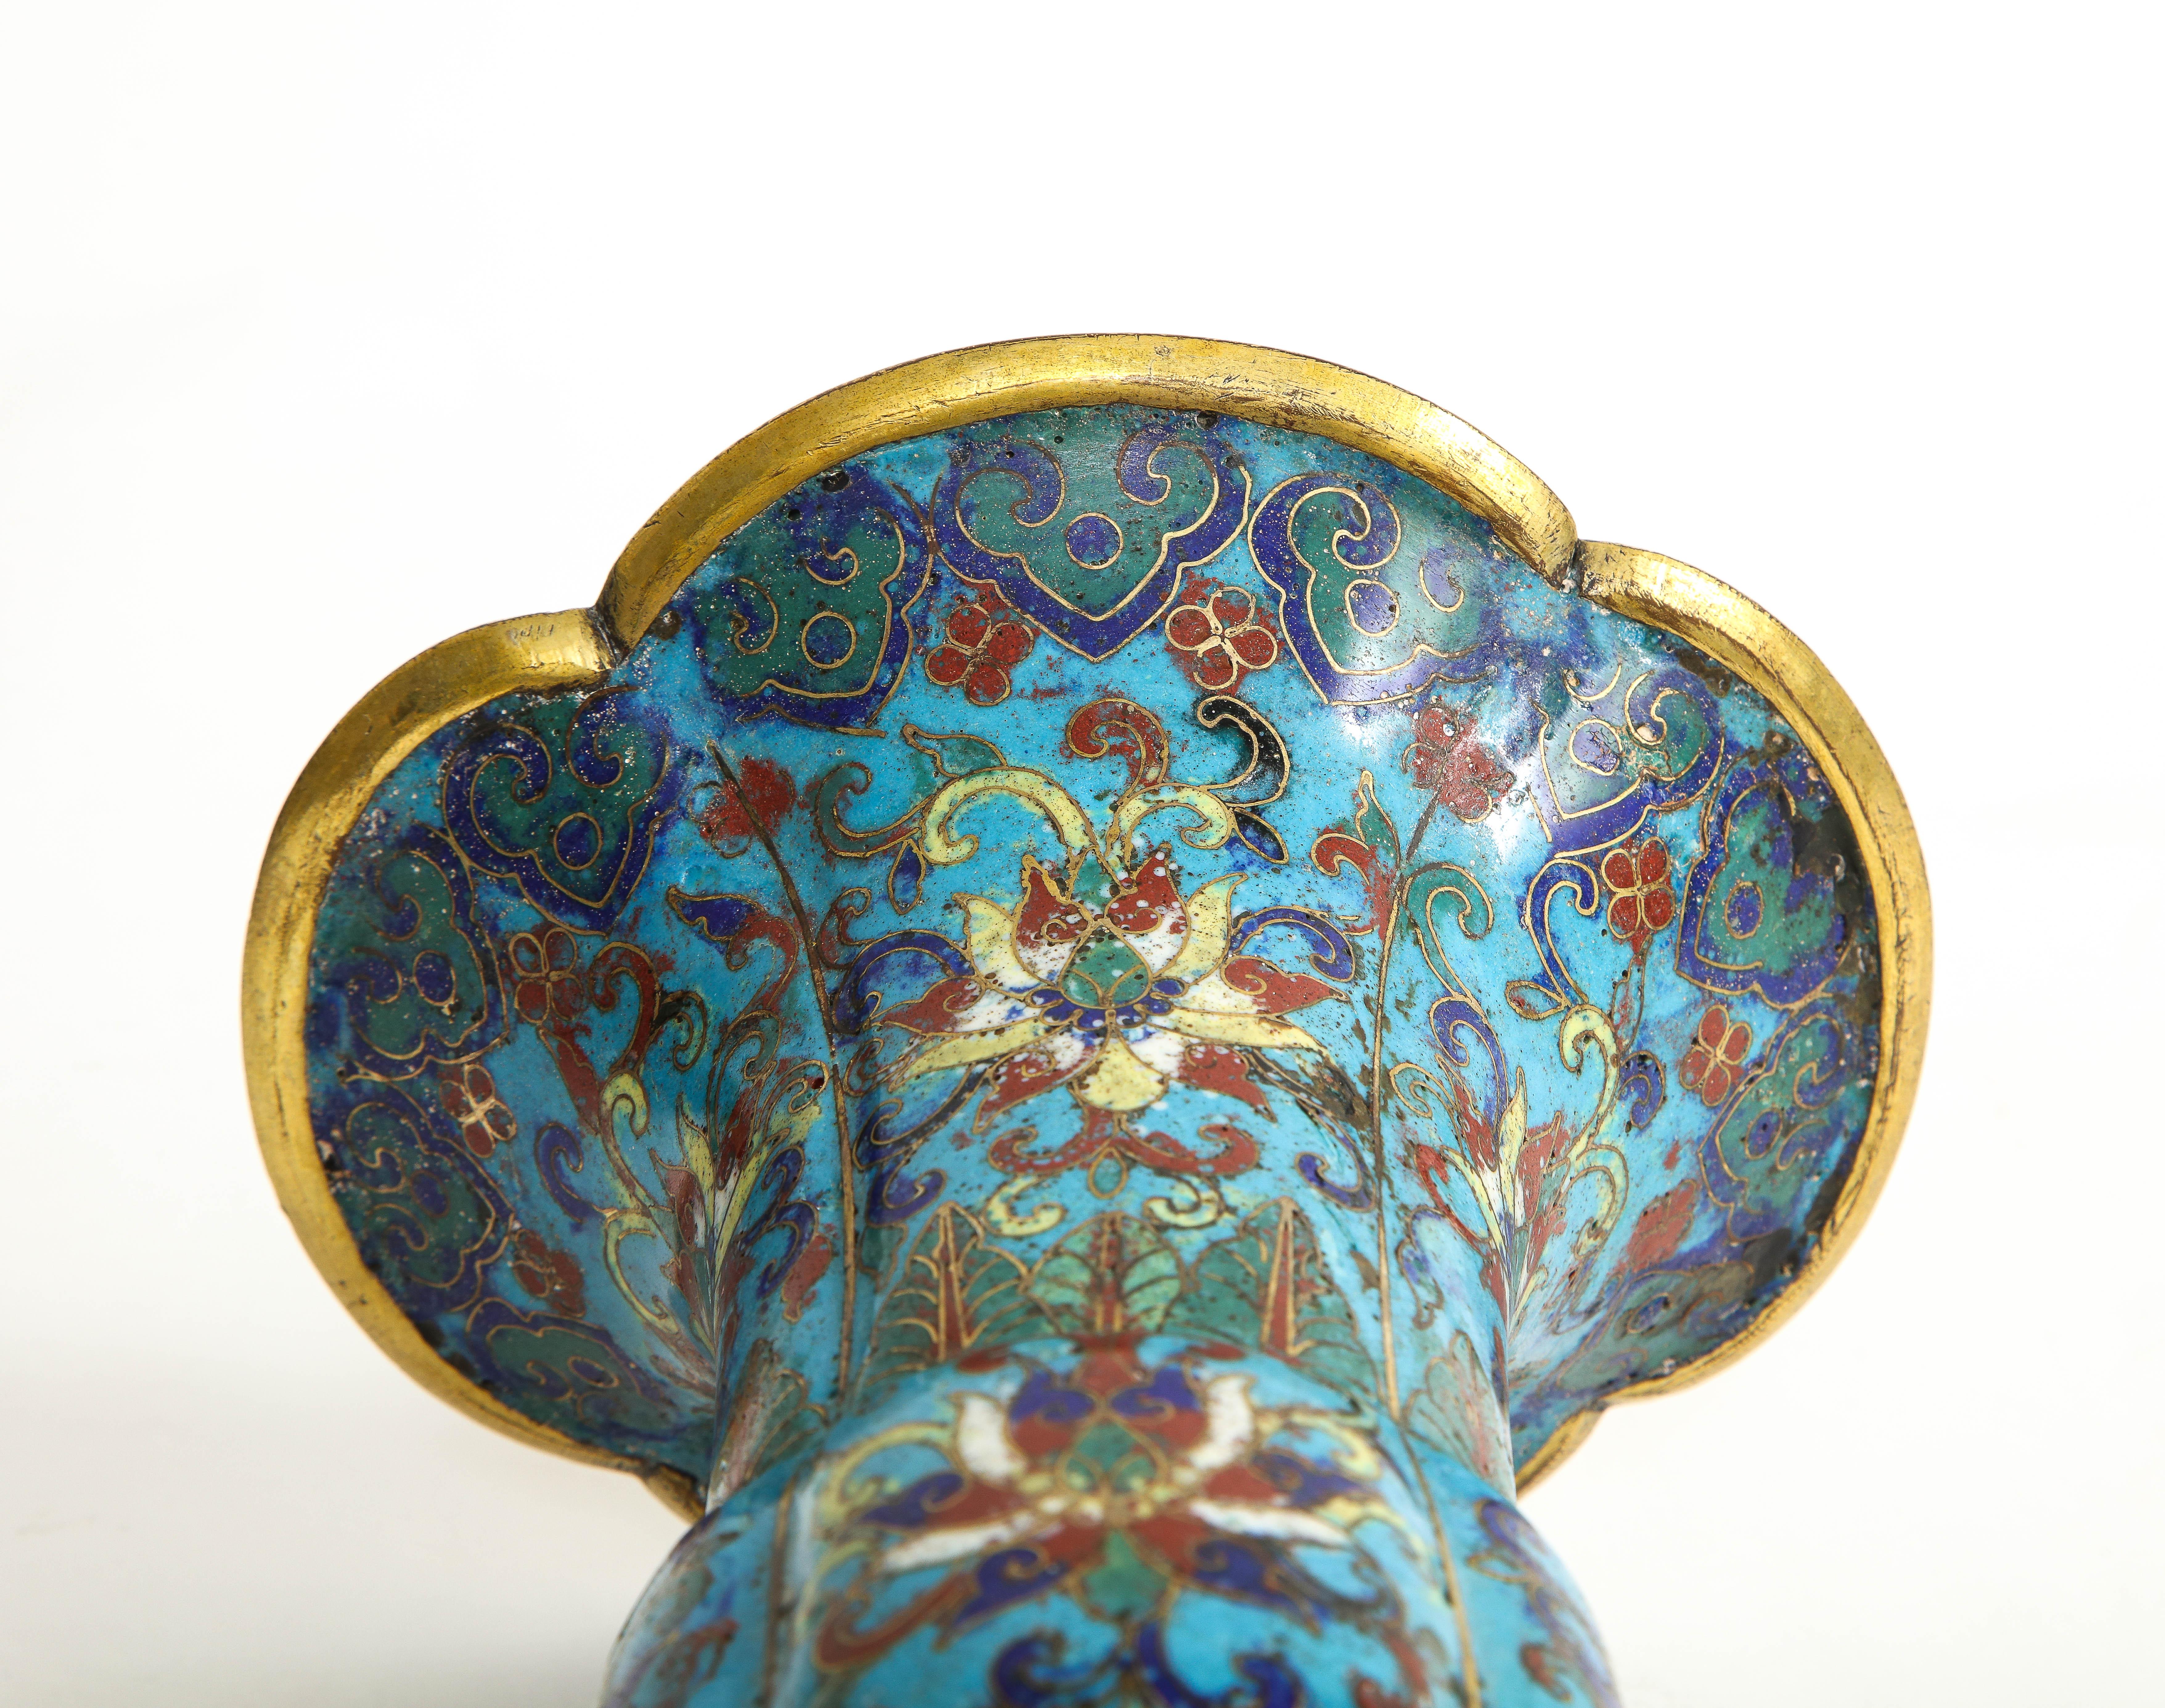 Antique Chinese Cloisonné Enamel Gu Form Vase, 17th/18th Century, Kangxi Period For Sale 4